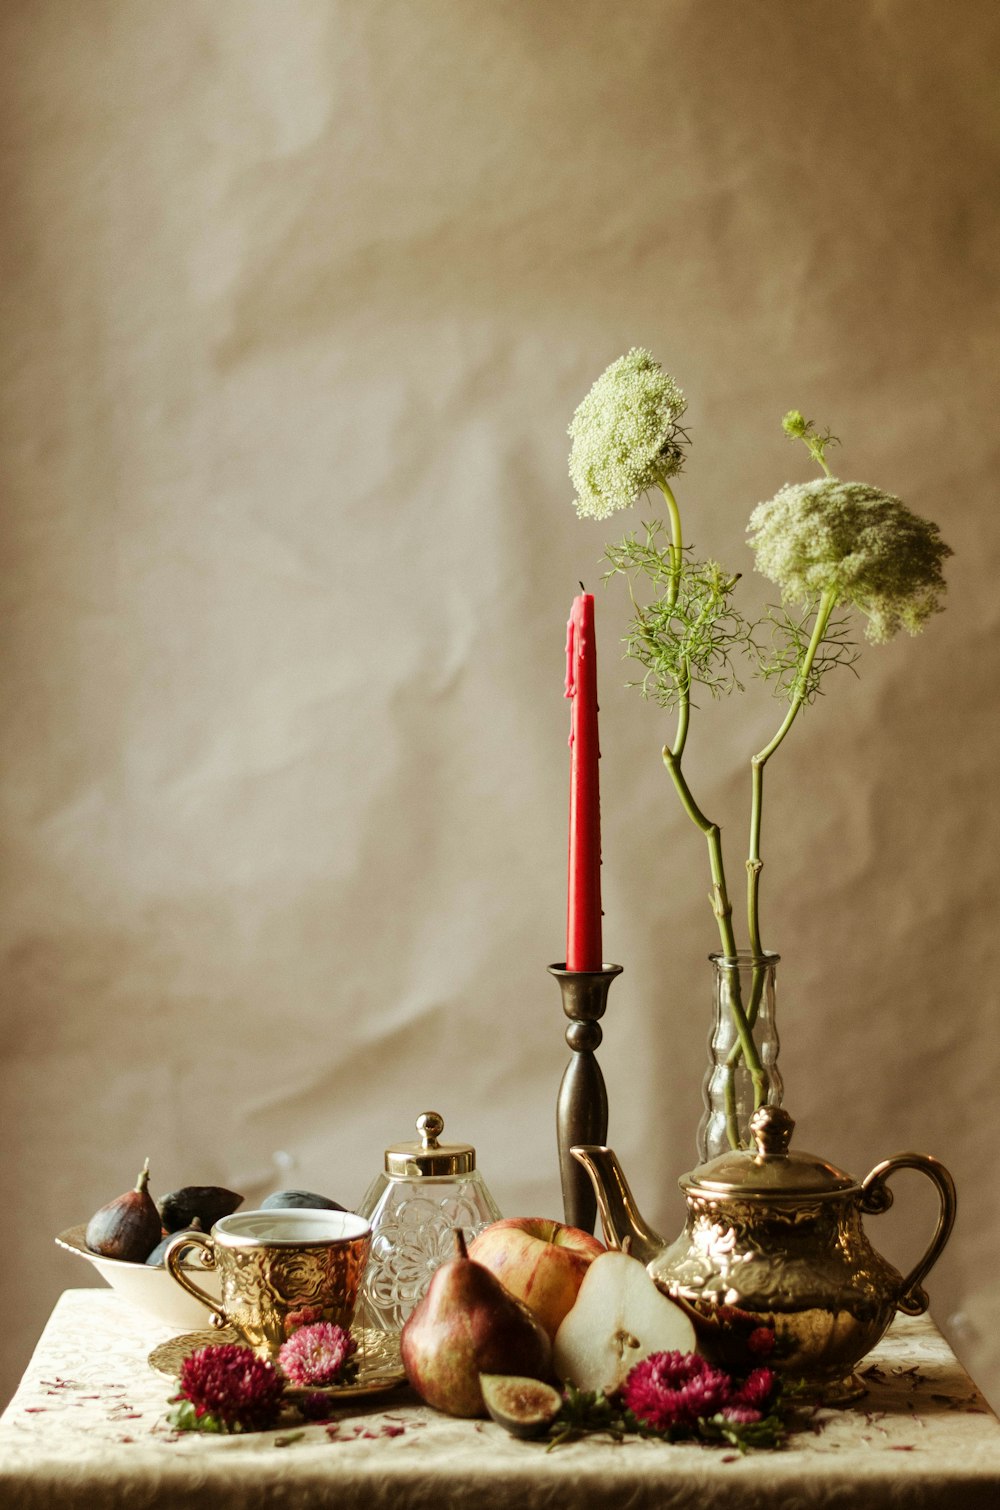 candela rossa in portacandele vicino a fiori petalati e teiera